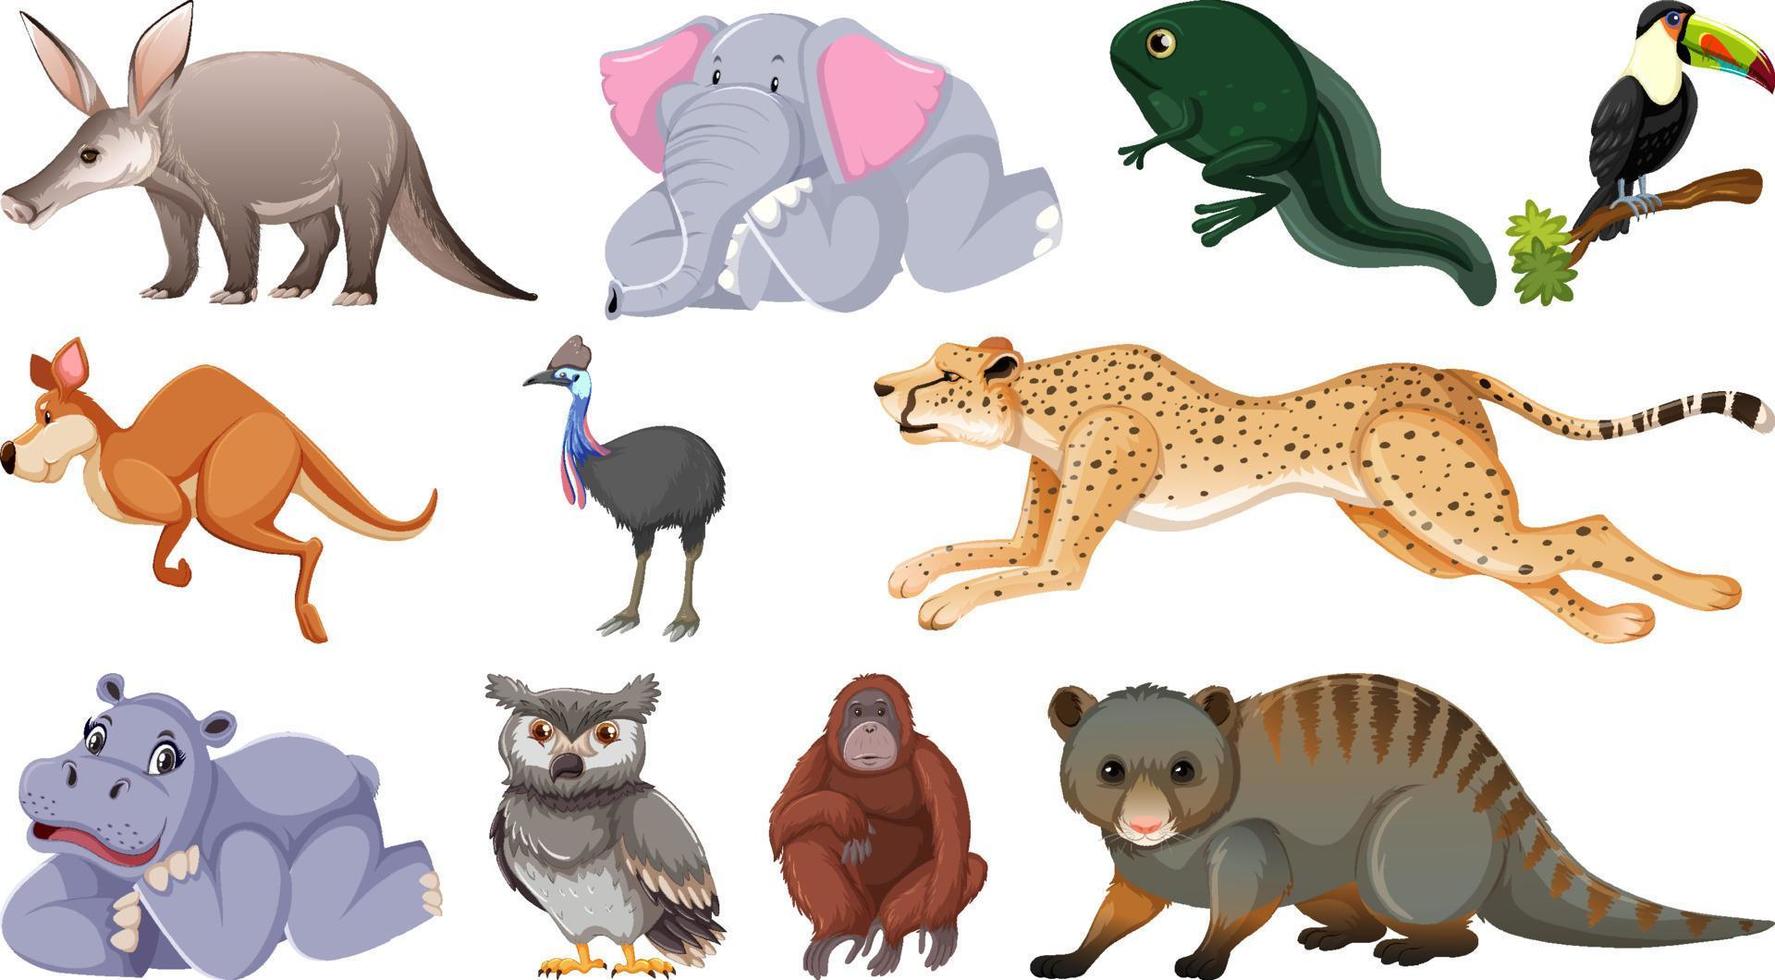 Set of different wild animals cartoon characters vector